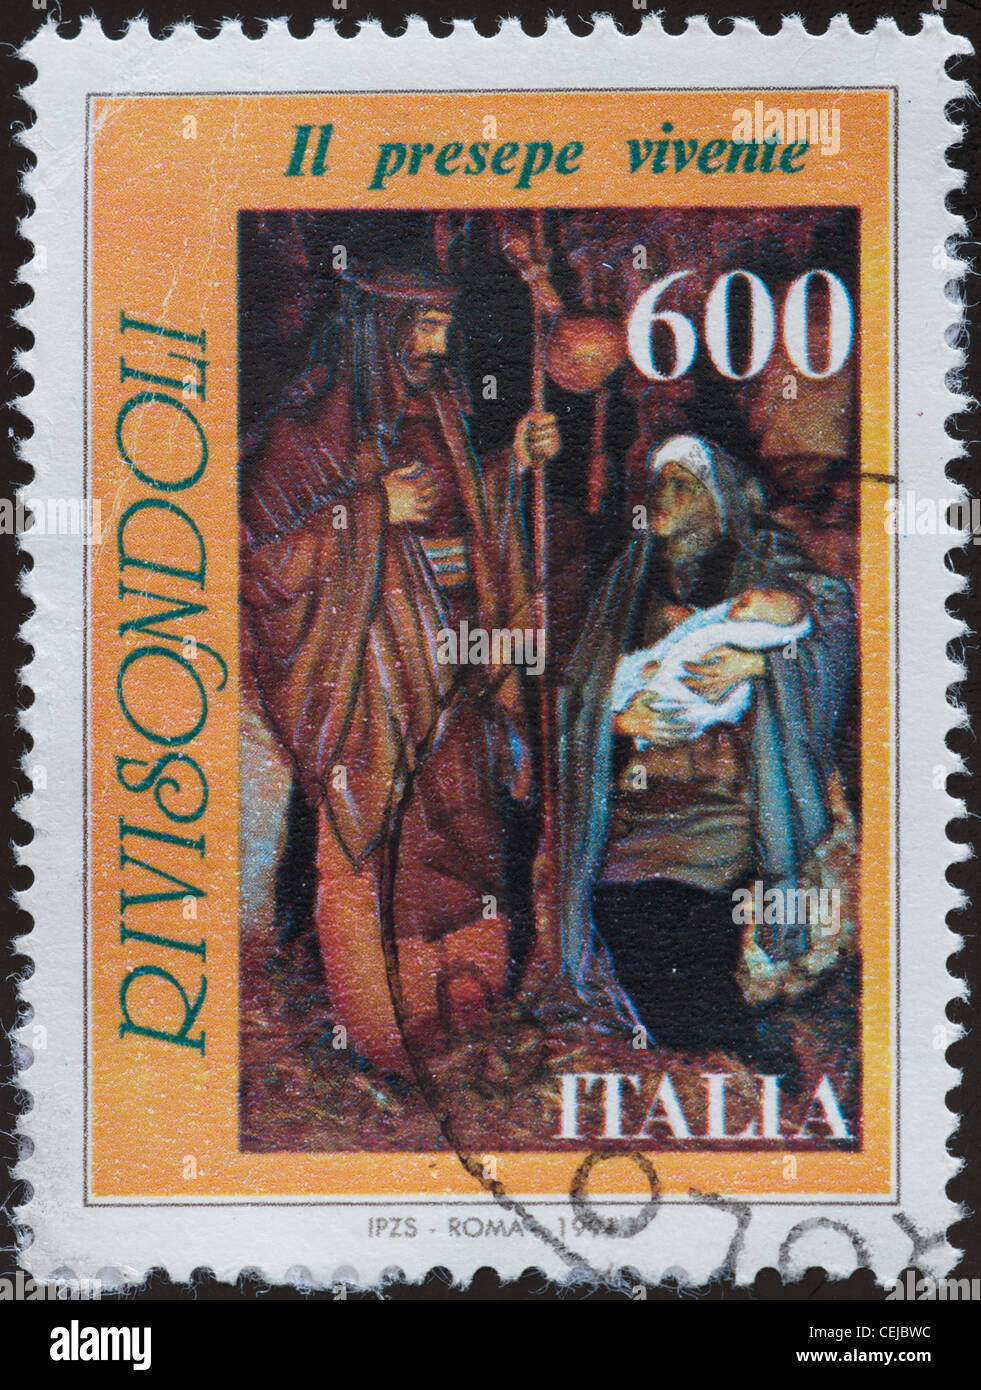 italian postal stamps Stock Photo